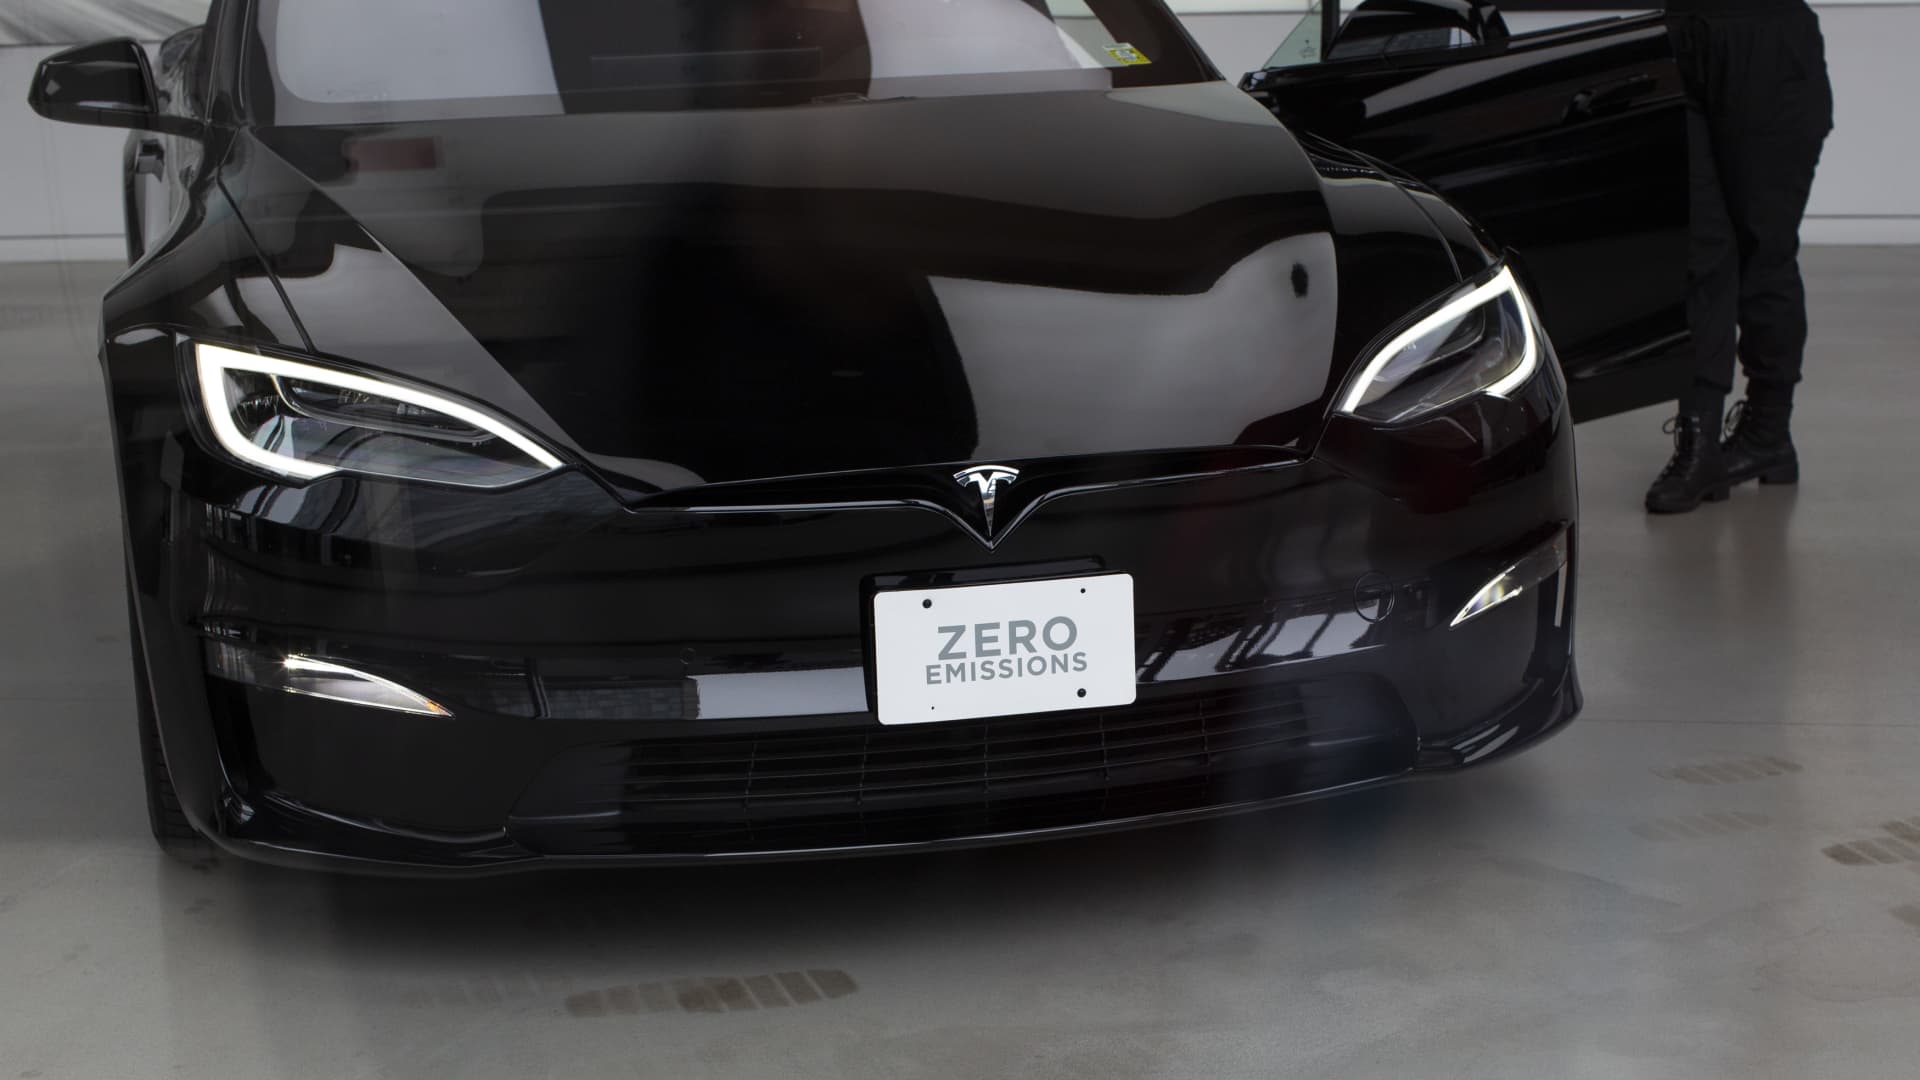 Jefferies cuts Tesla price target, cites ‘uncomfortable pile up of negative news’